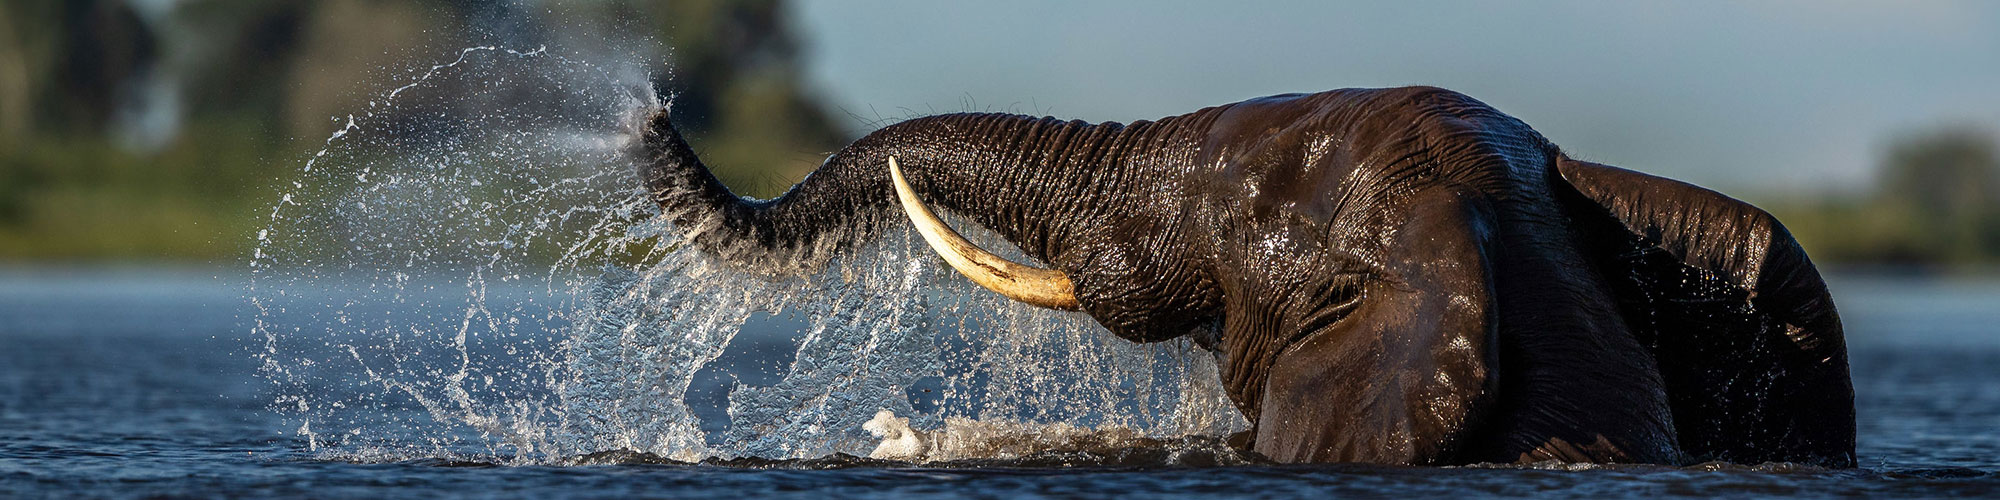 Elephant Chobe River Photo Safari